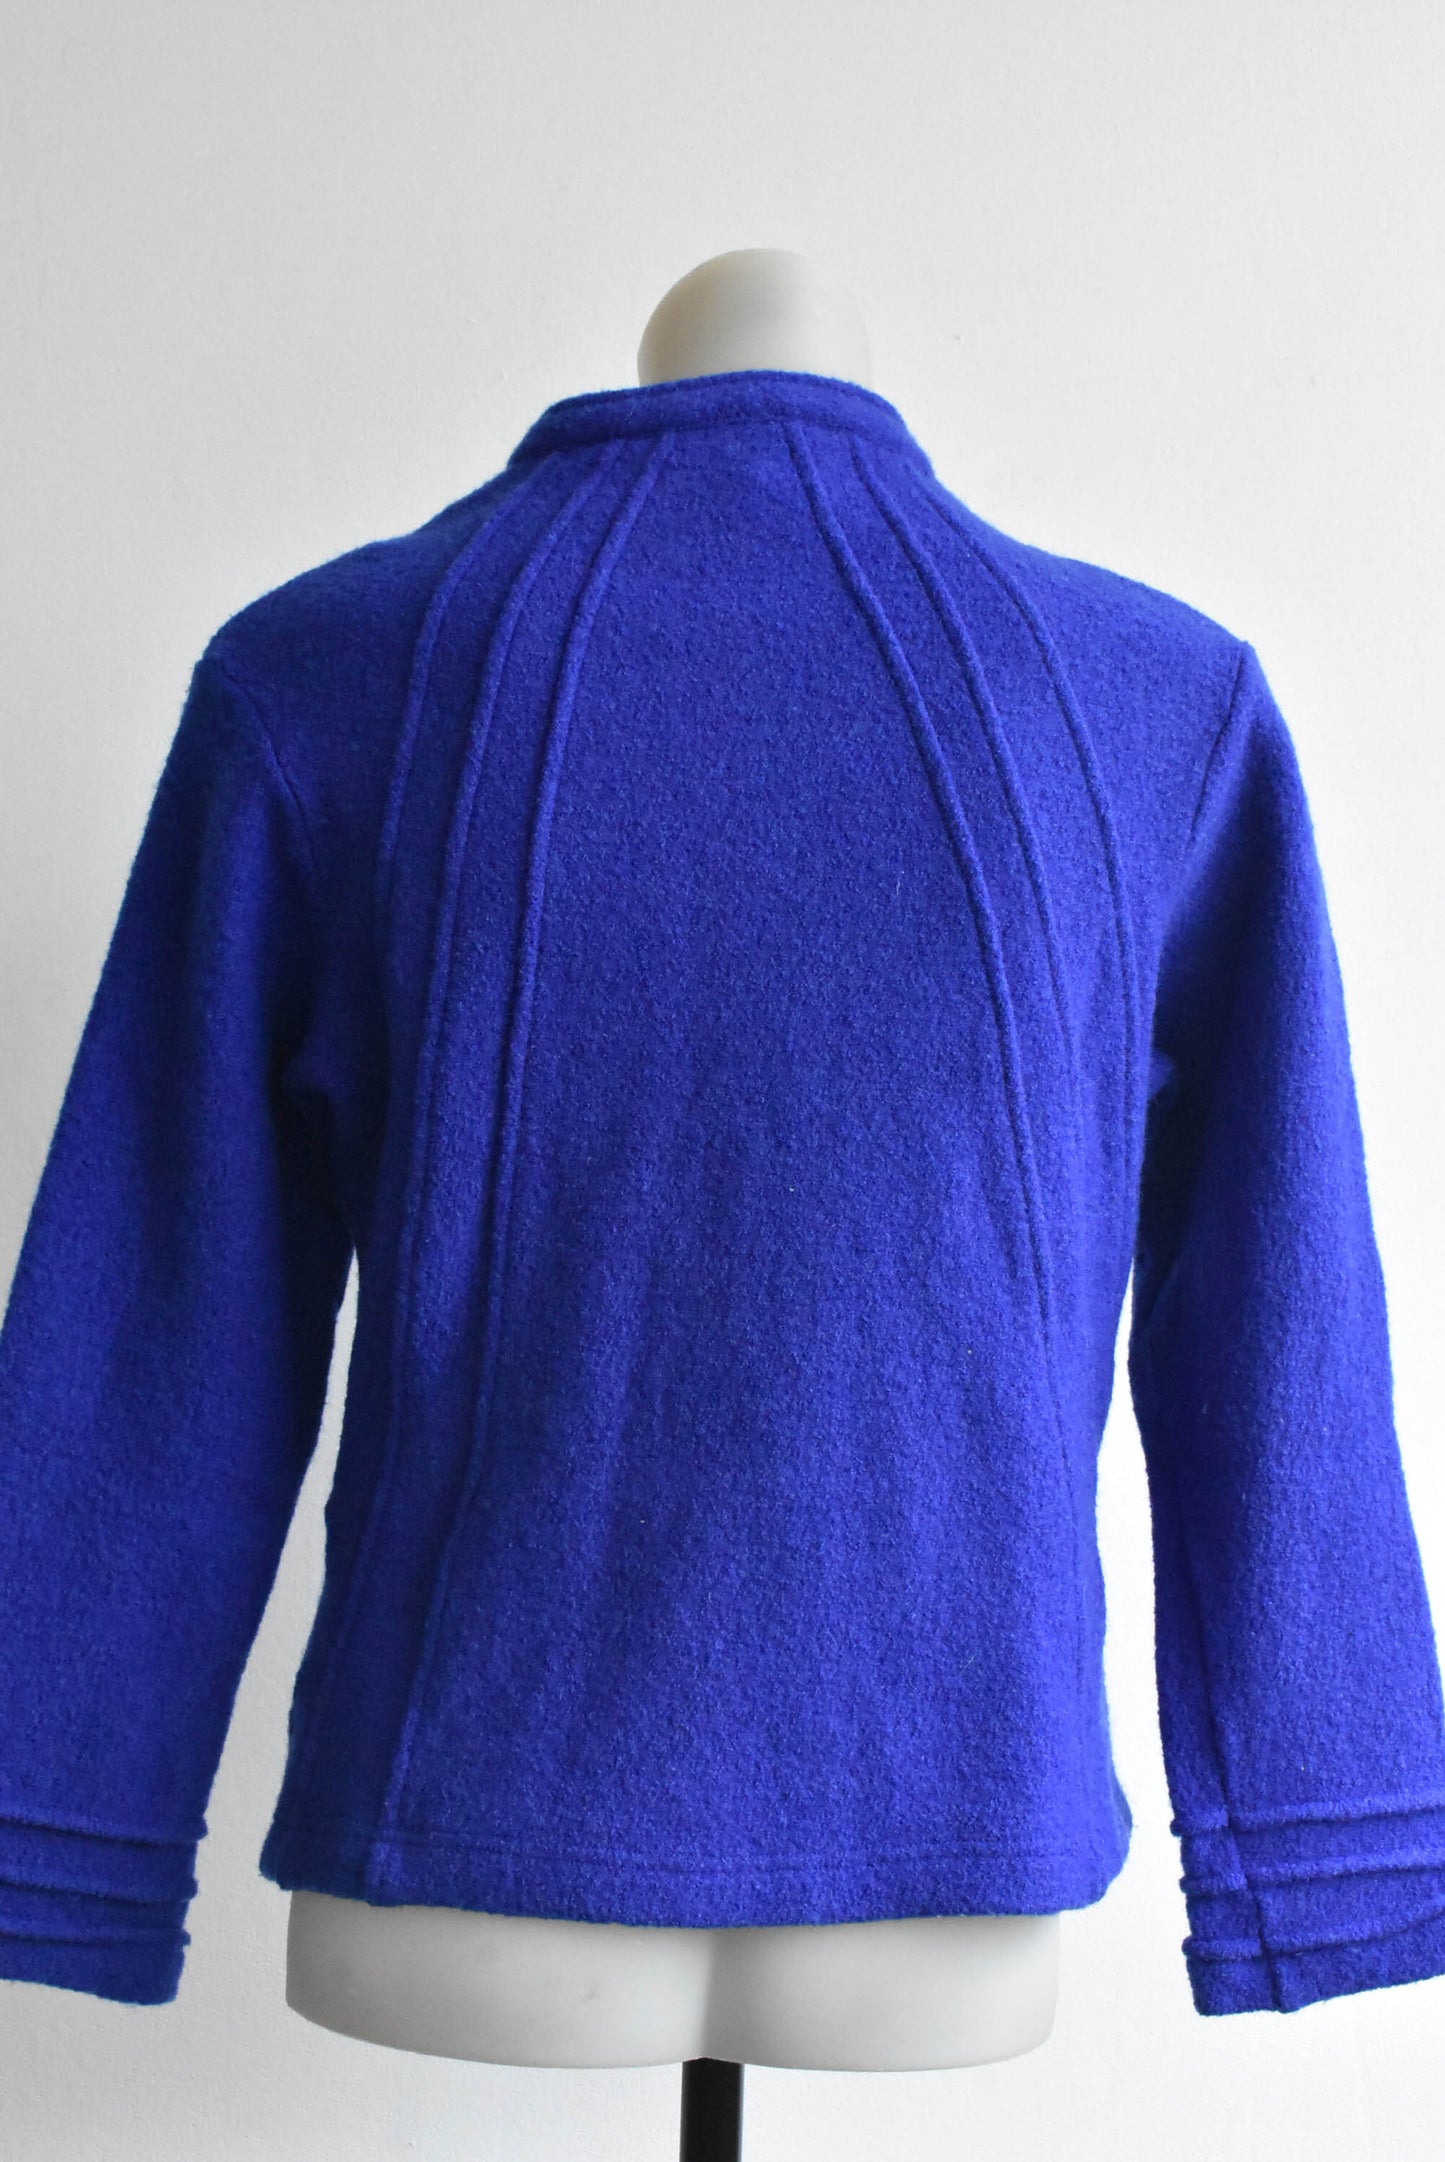 Black Pepper by Breakaway royal blue wool cardigan/jacket, size 10